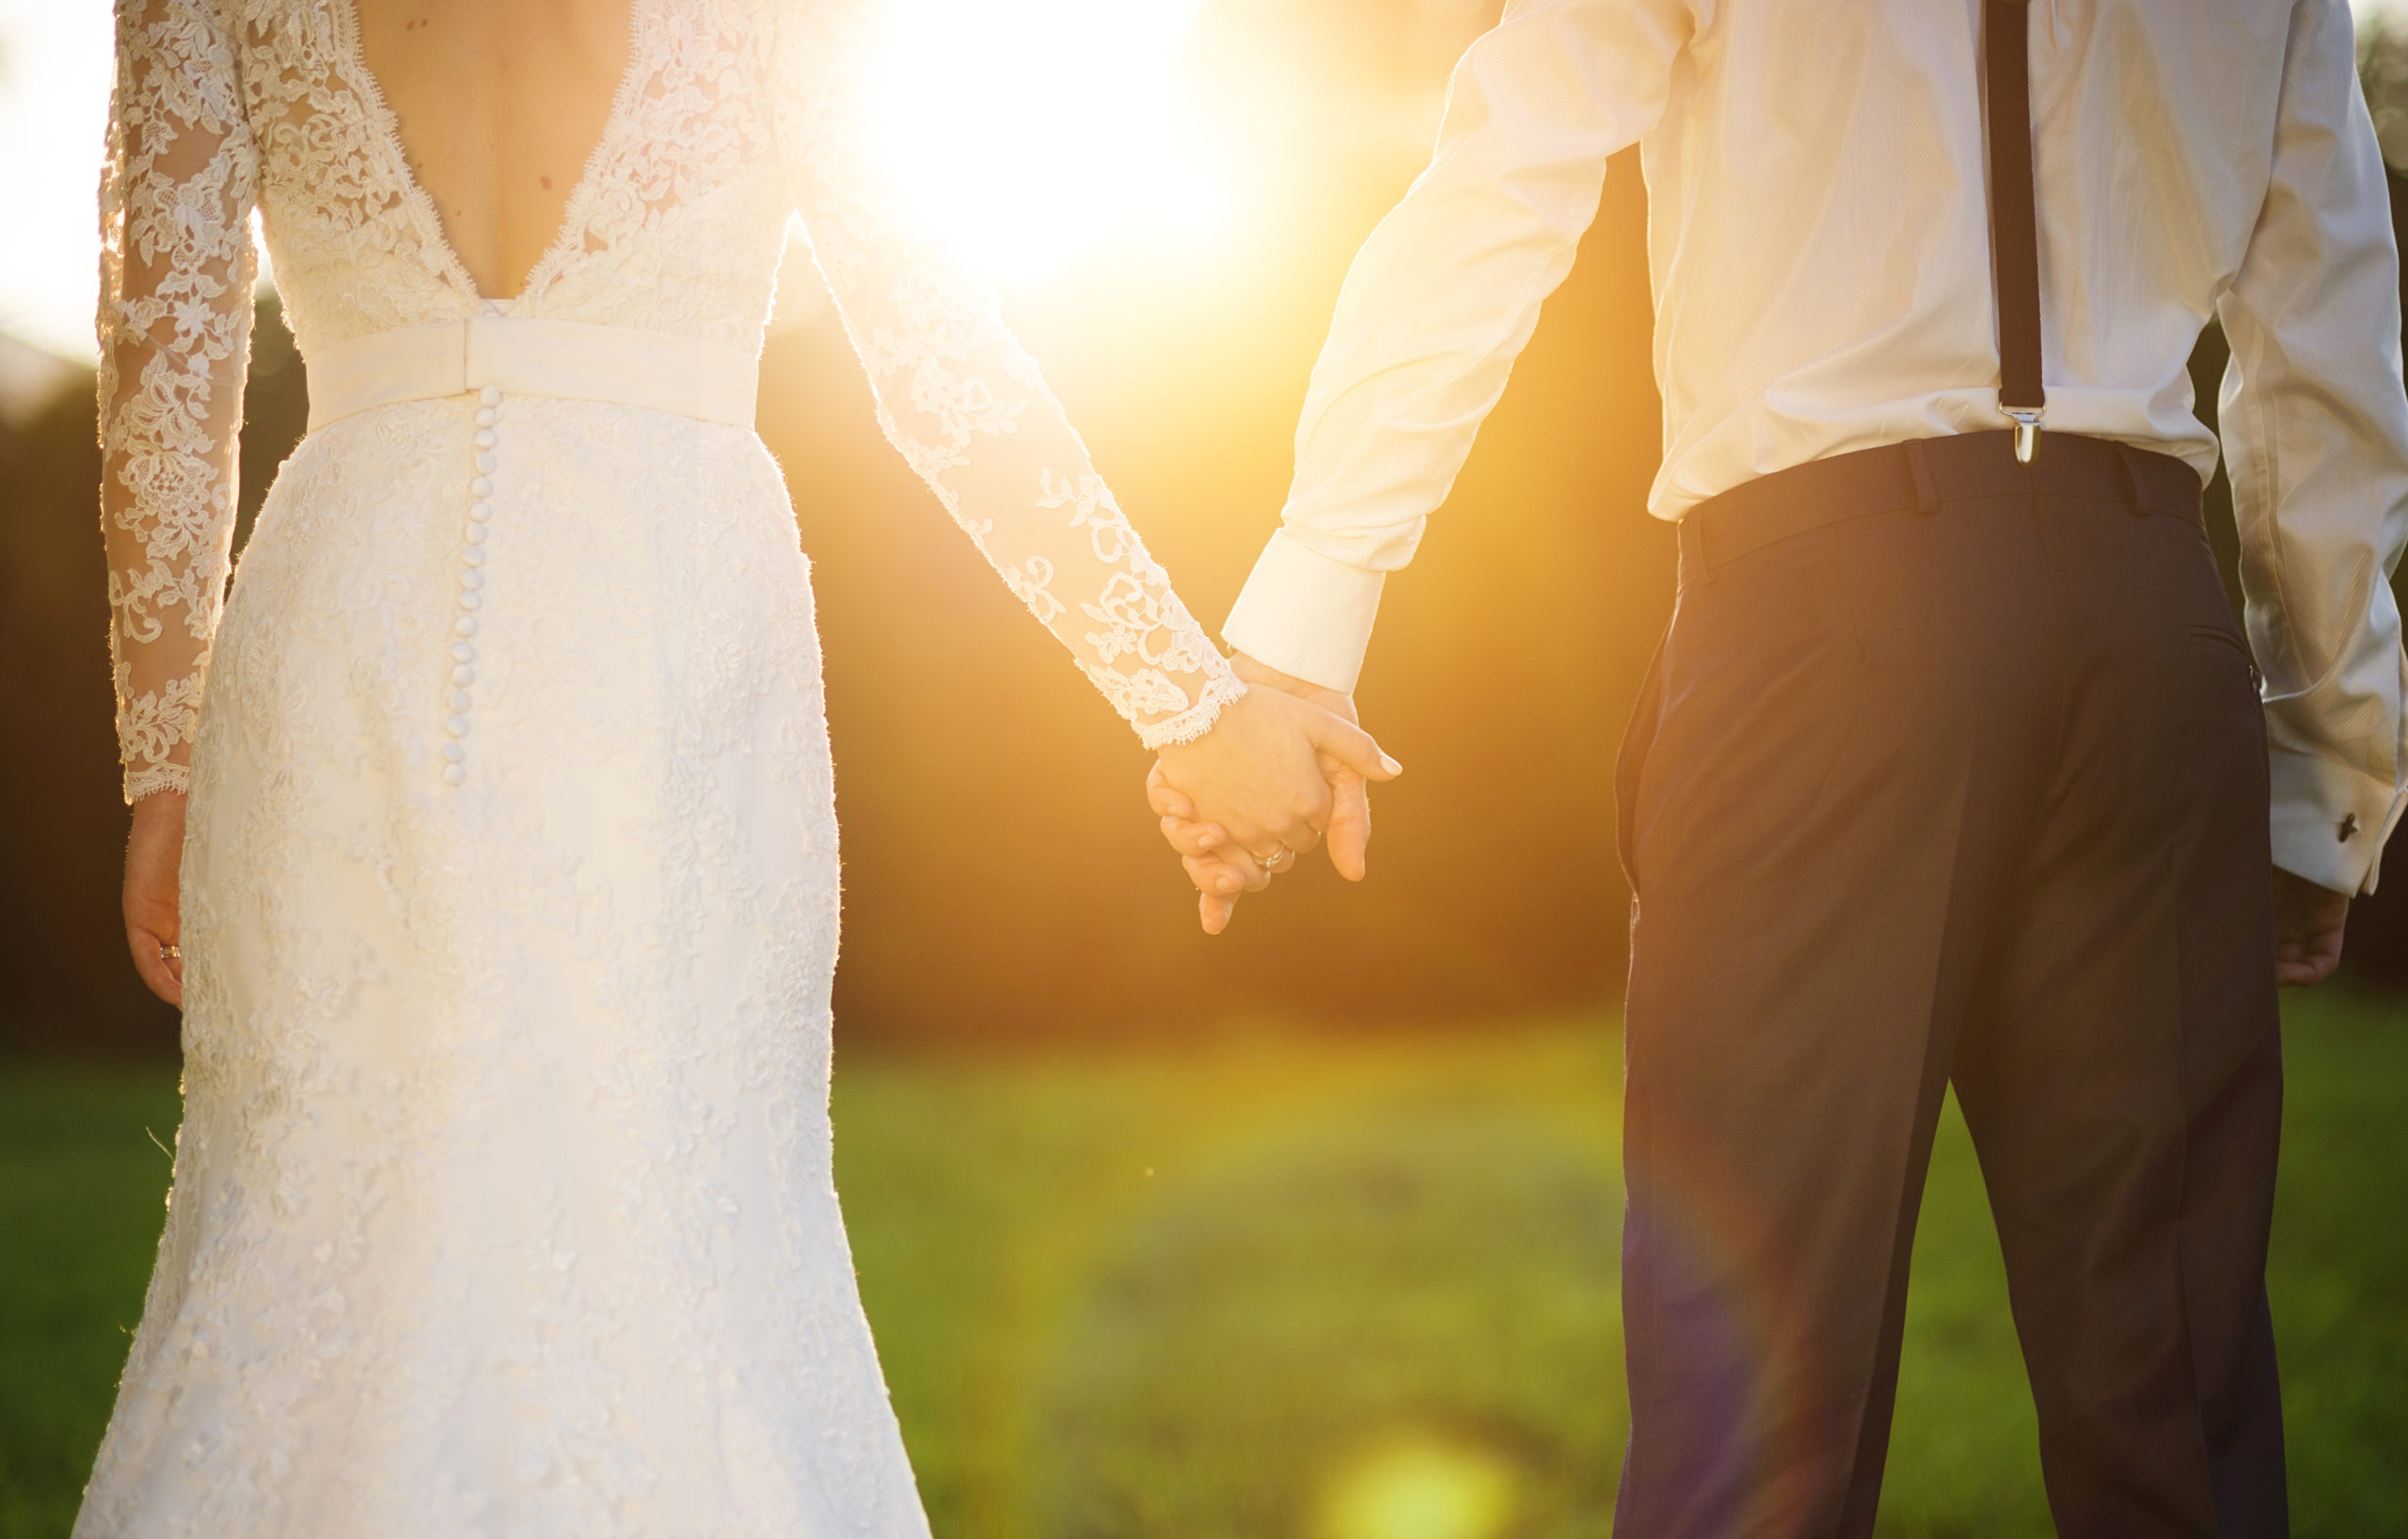 Tips For Choosing the Best Outdoor Wedding Venue